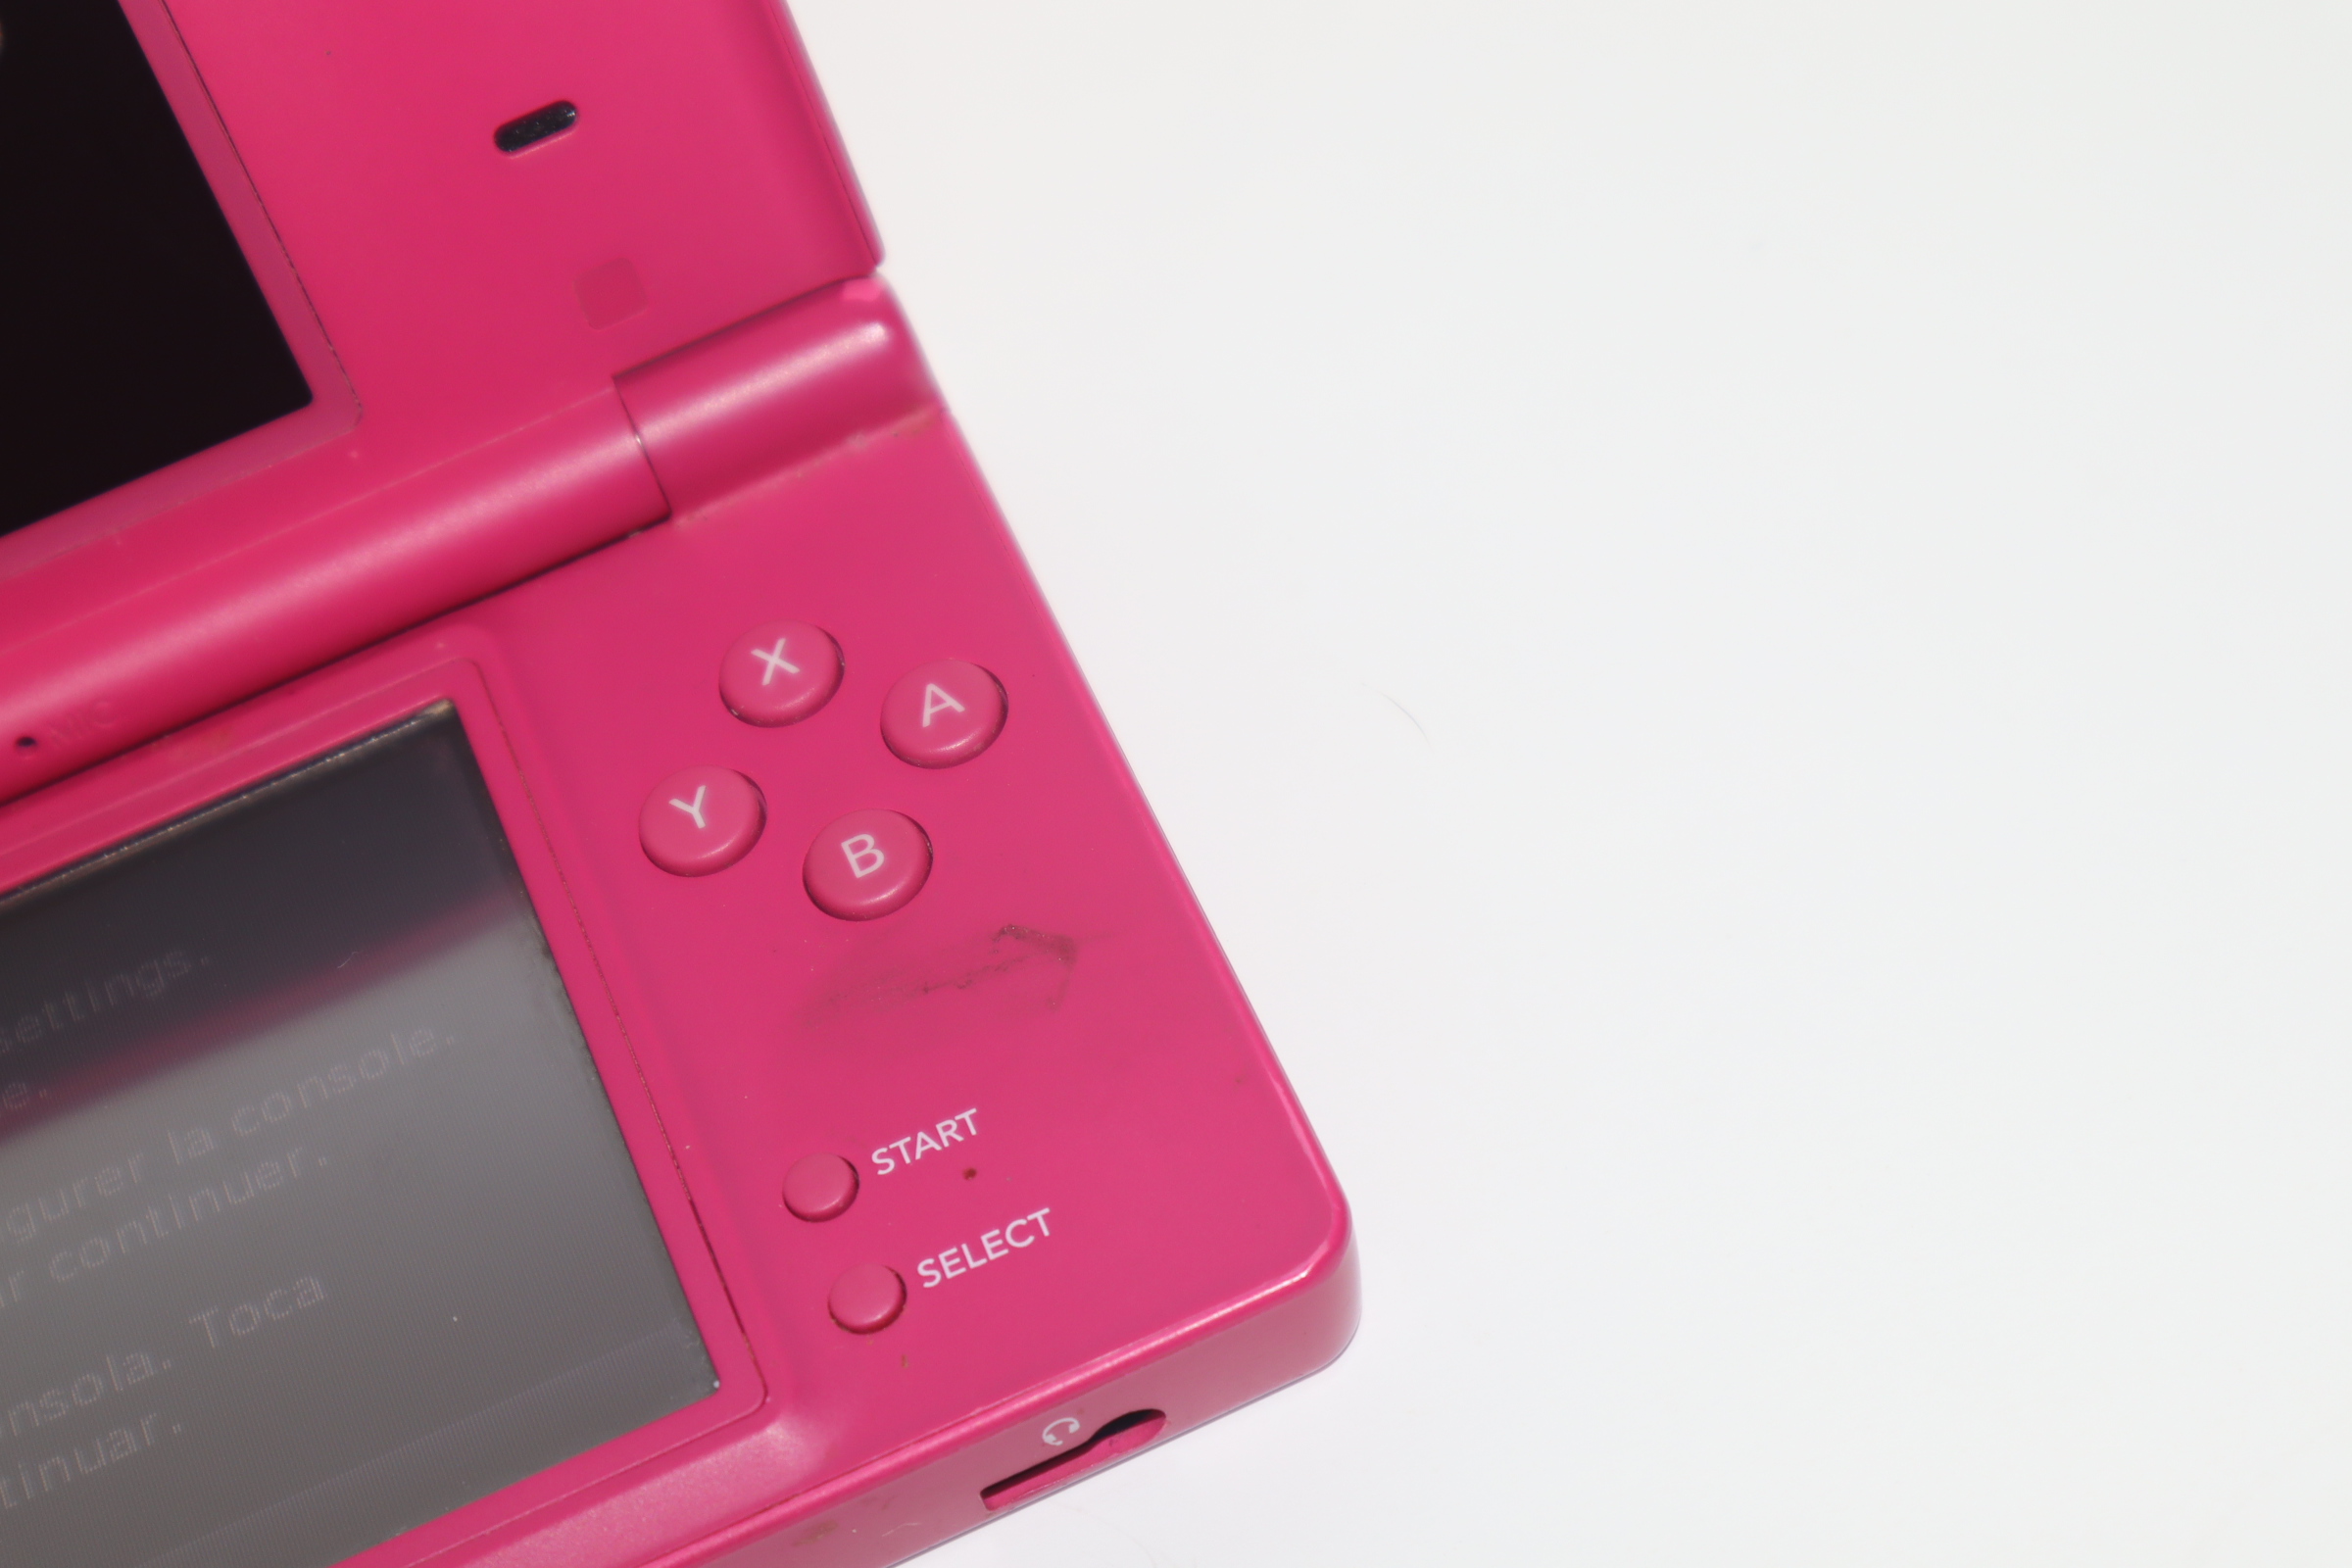 Nintendo DSi Portable Pink Console, Beautiful Body + Working Good